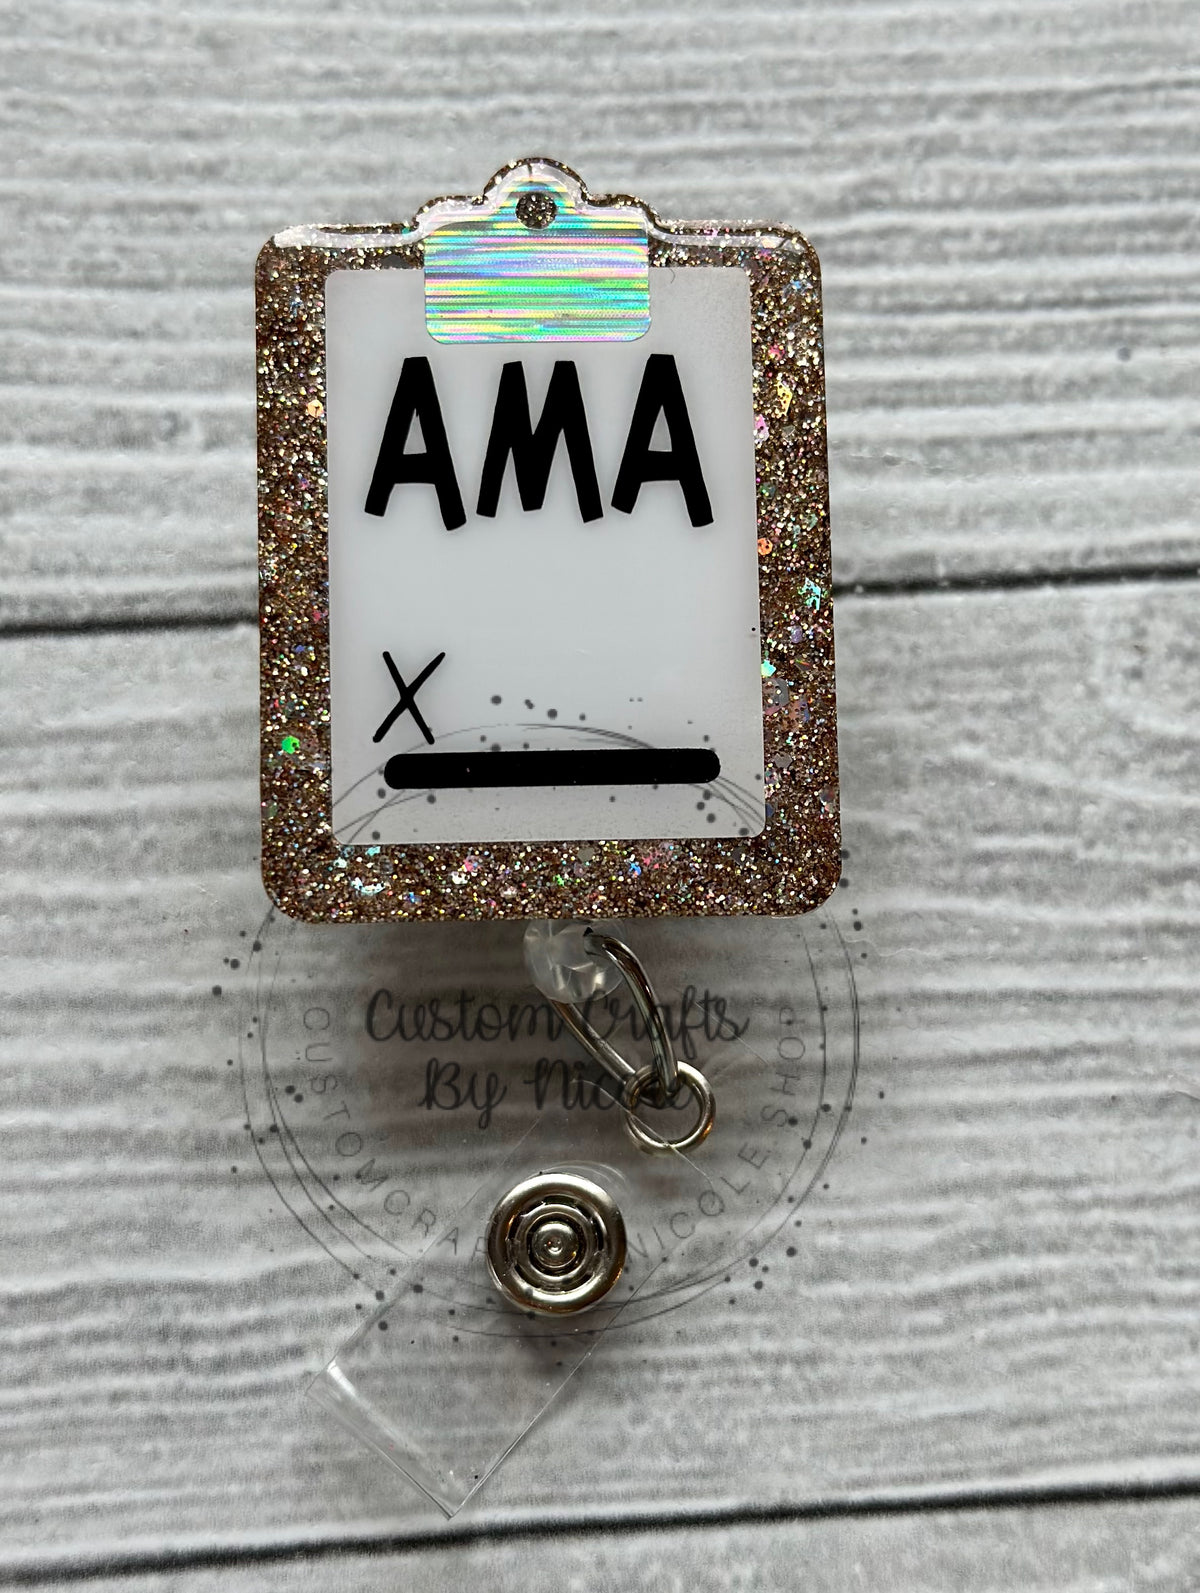 AMA clipboard